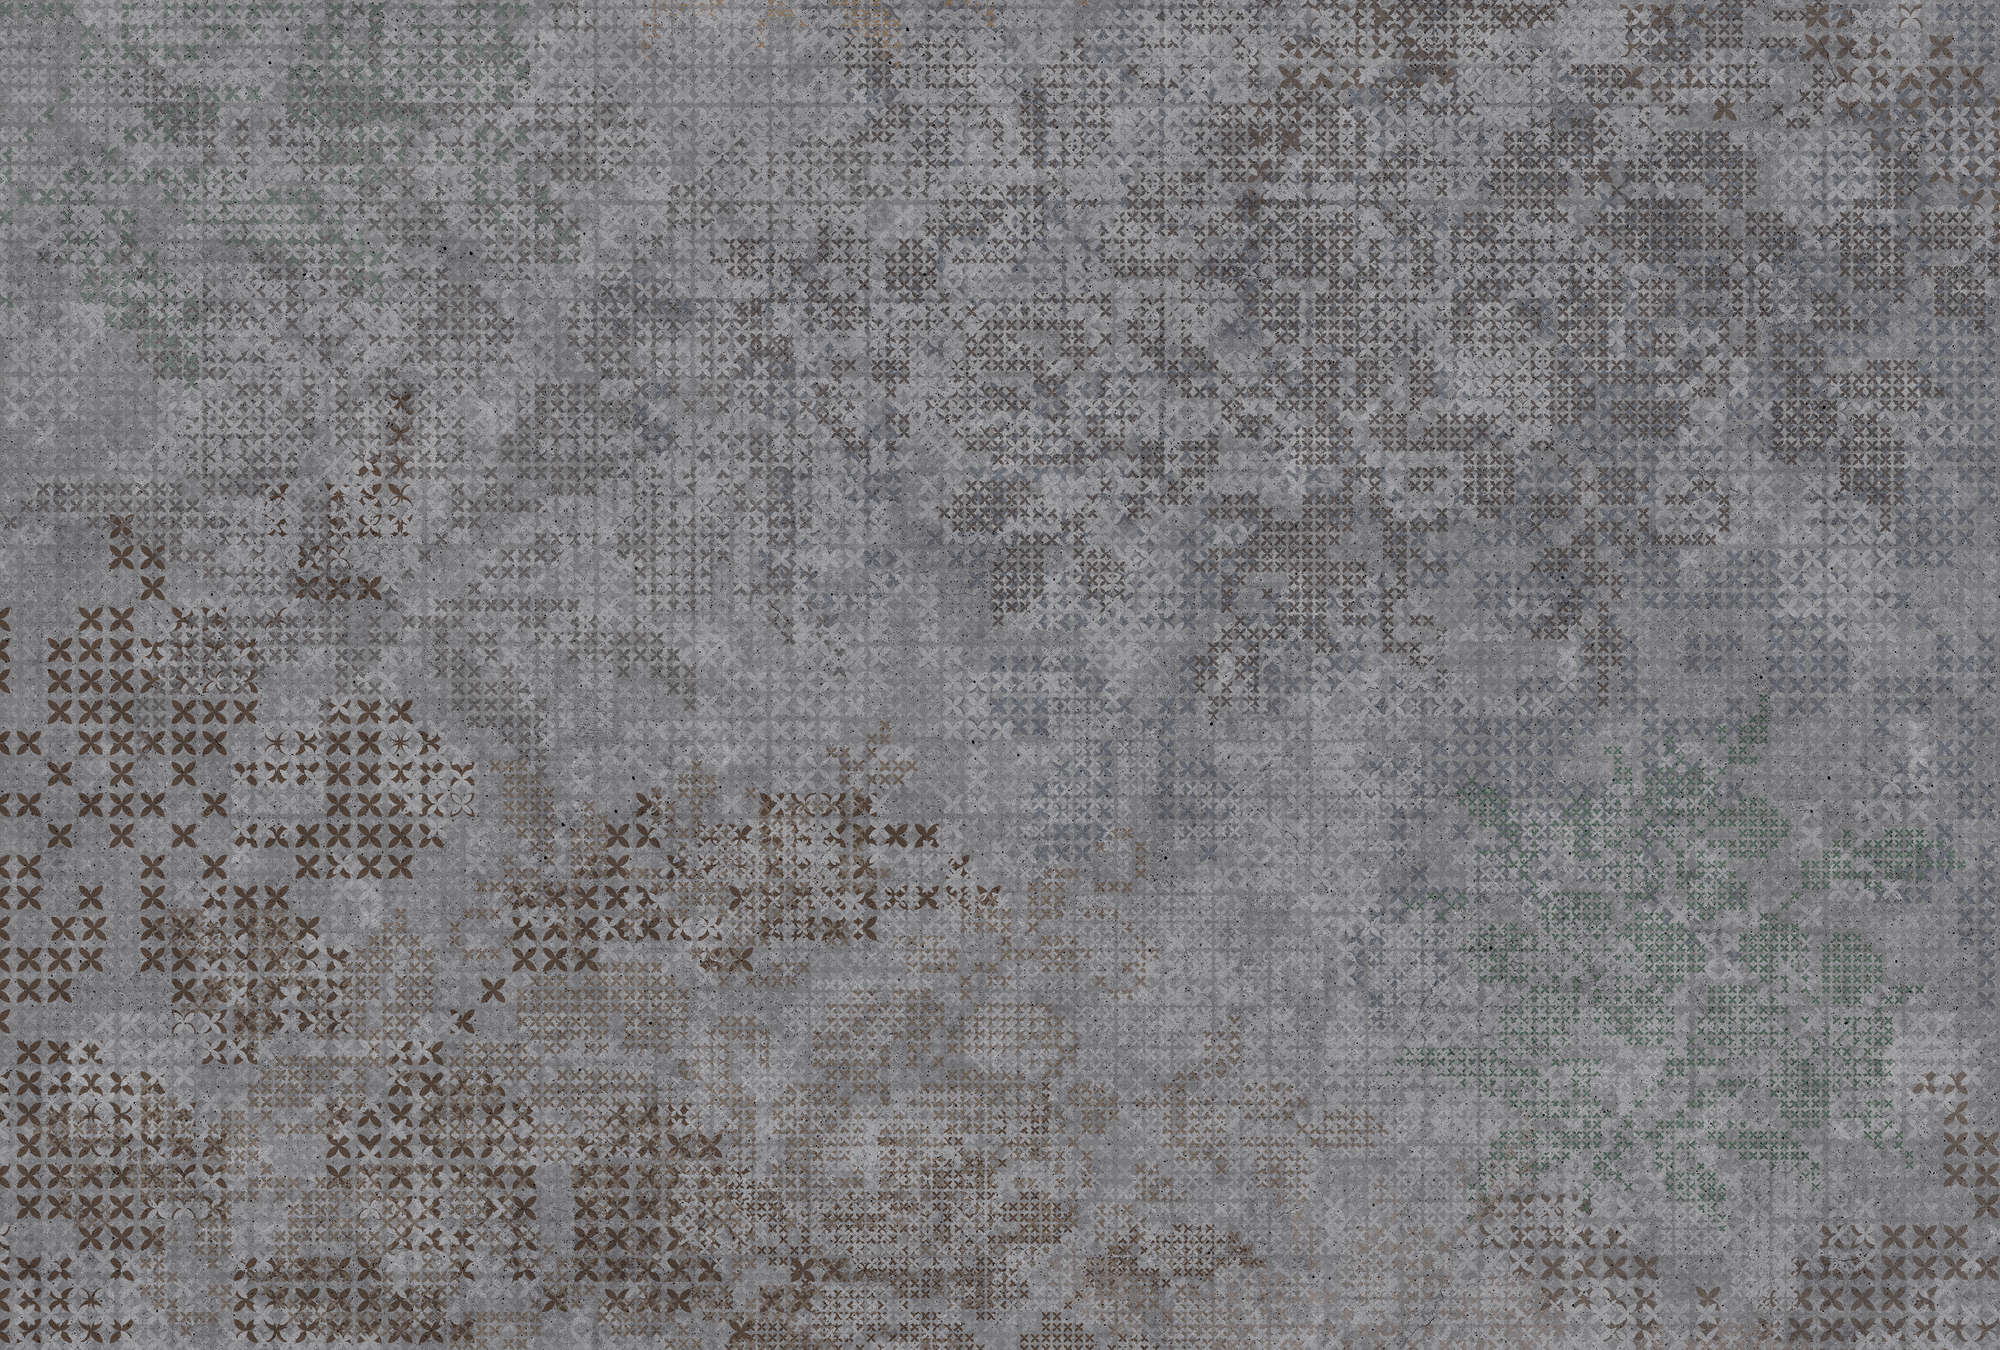             Fototapete Kreuz Muster im Pixel-Stil – Grau, Schwarz
        